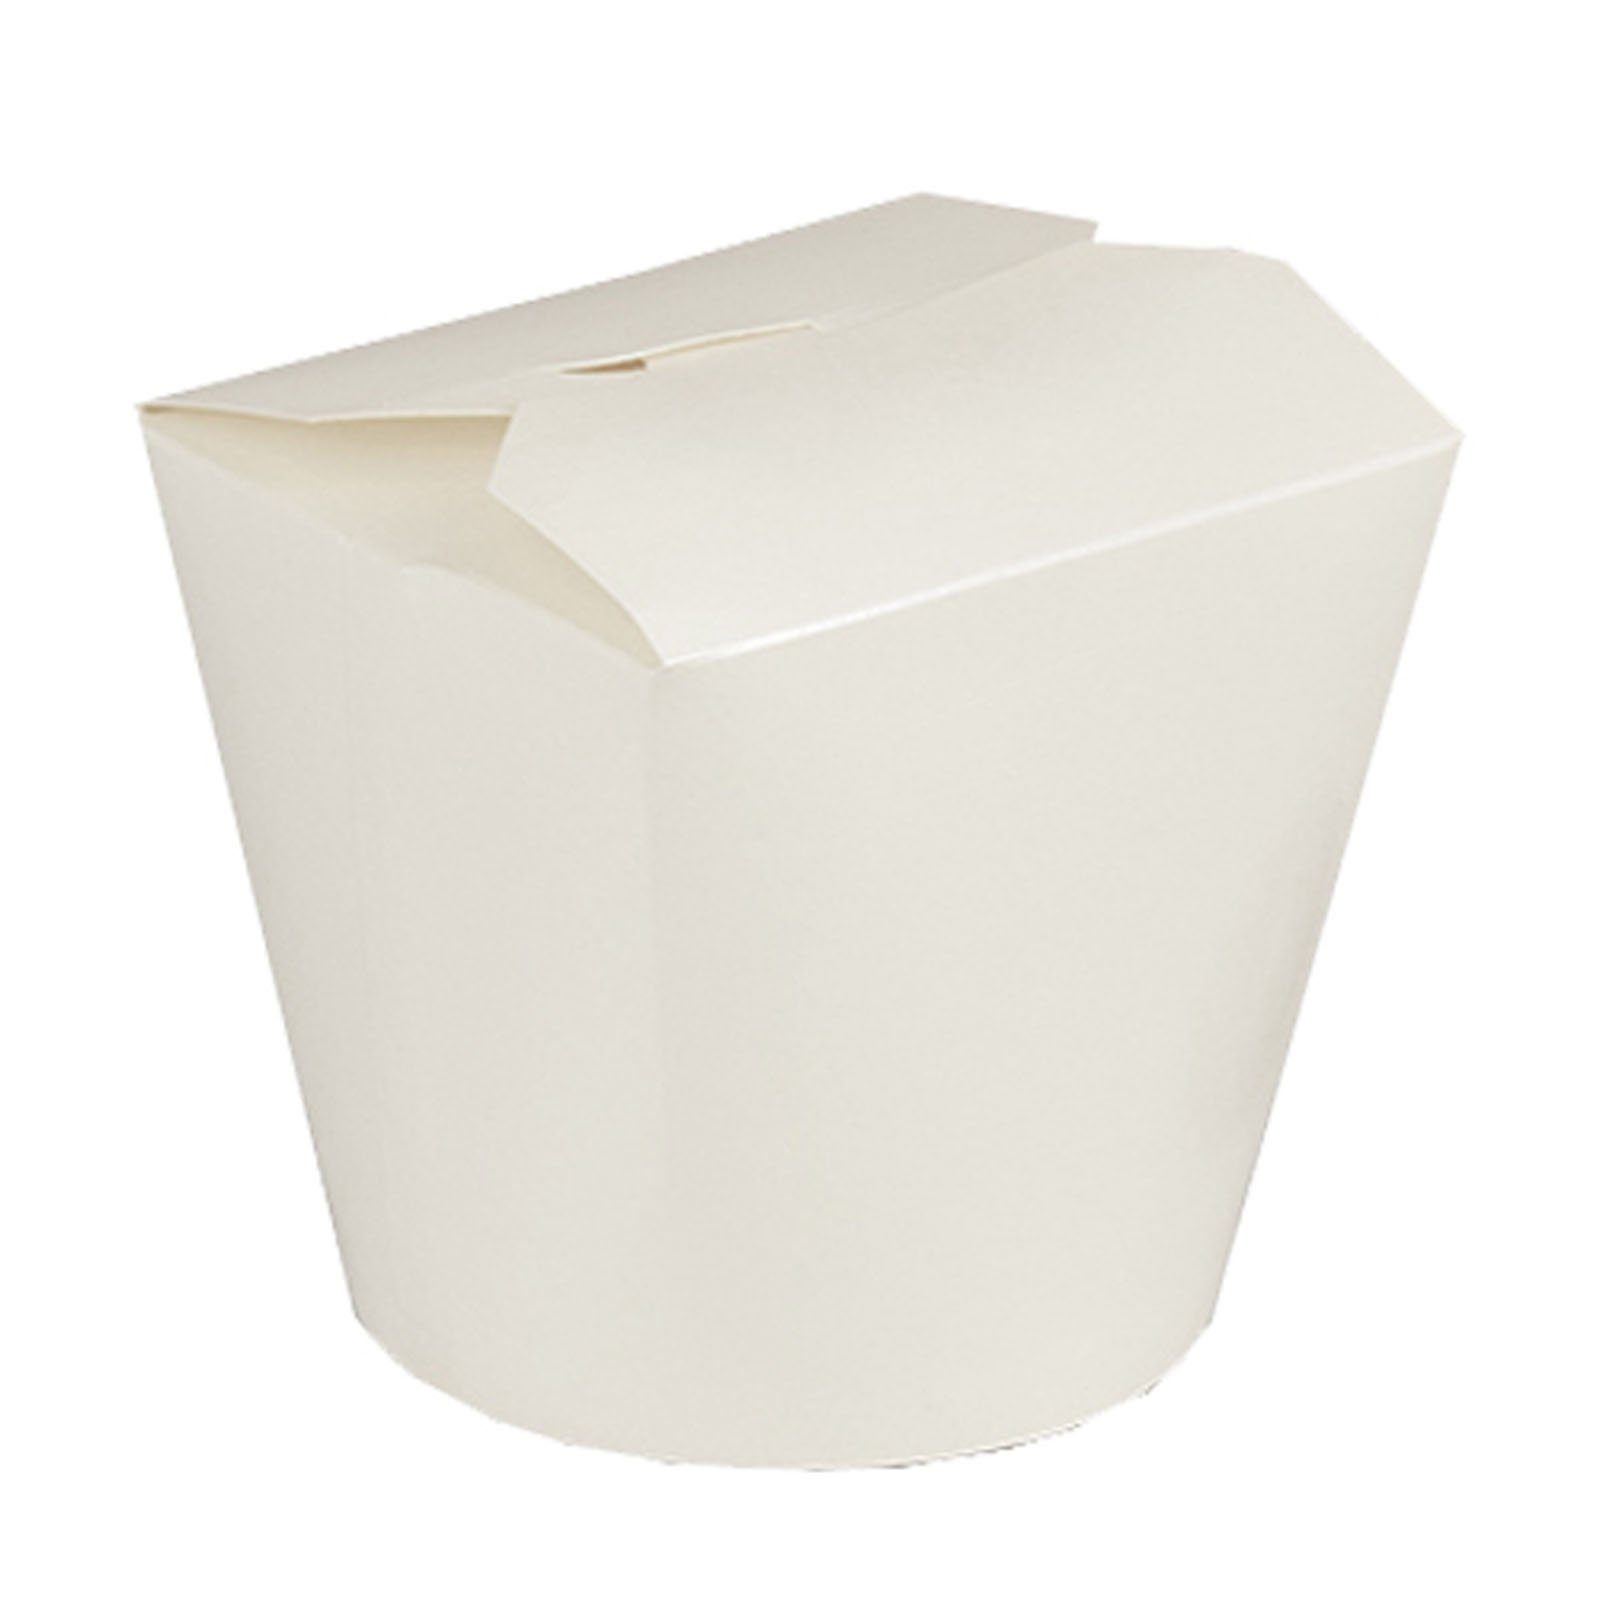 Starpak Einwegschale 500 Stück Nudelbox - Asia Box eckig 750 ml 10,1 x 10 x 9,1 cm weiss